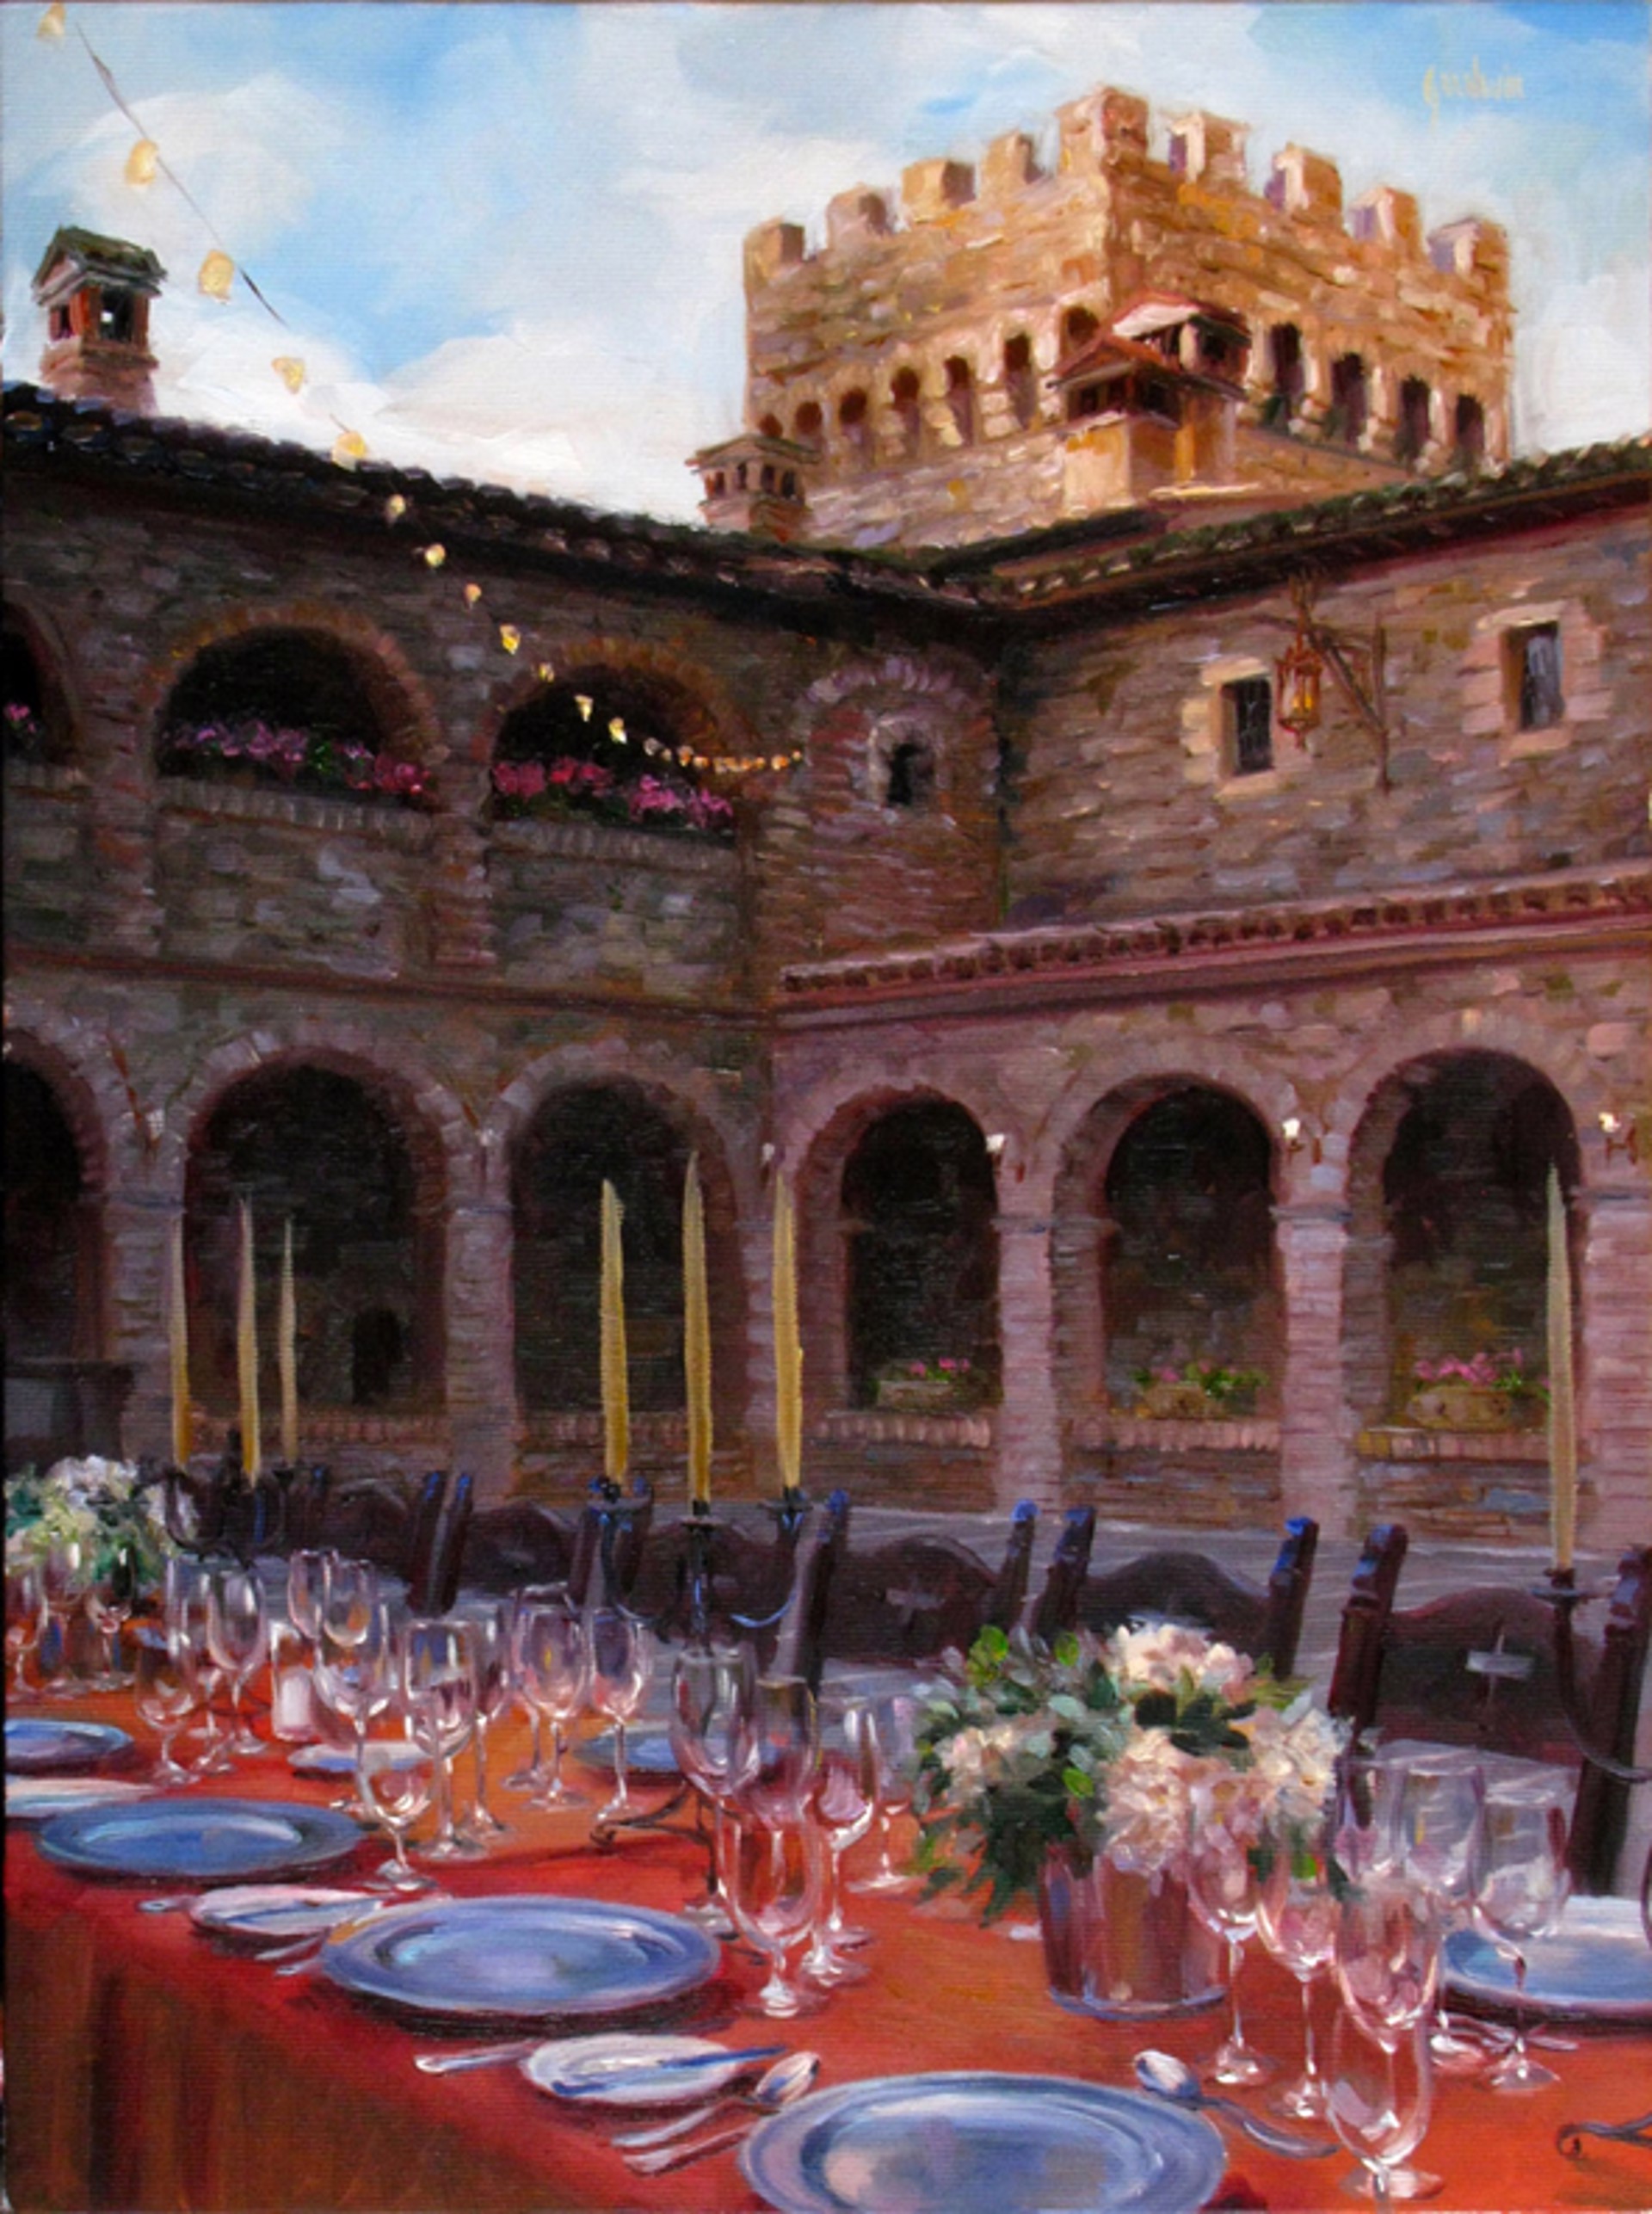 Parapet of Castello di Amorosa by Lindsay Goodwin